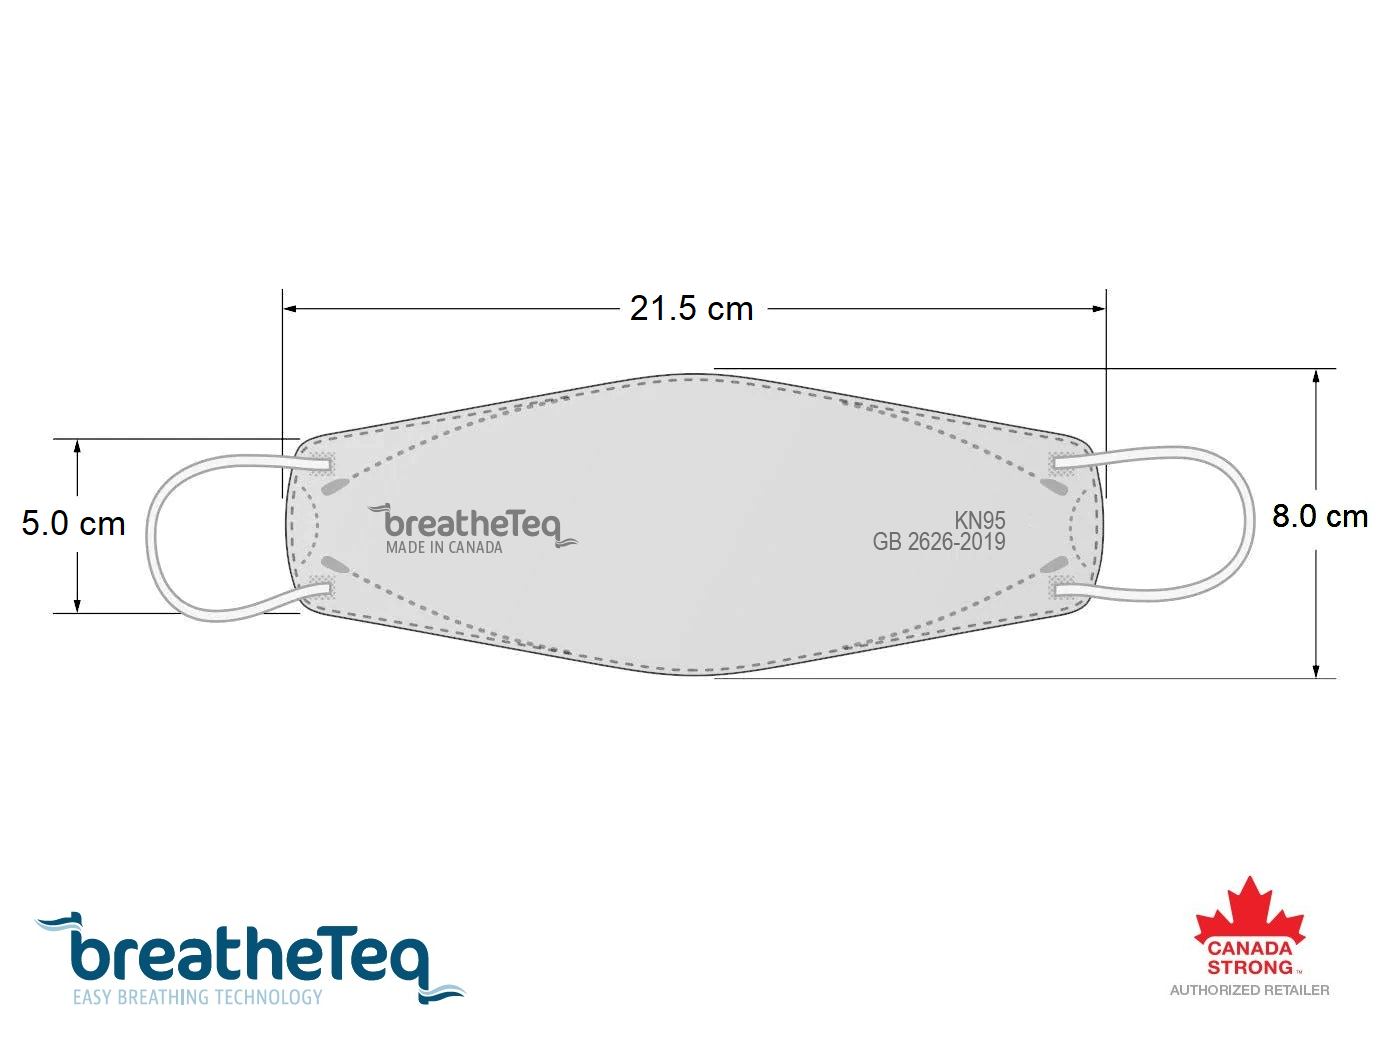 Dimensions of BreatheTeq KN95 large grey size flat fold respirator mask